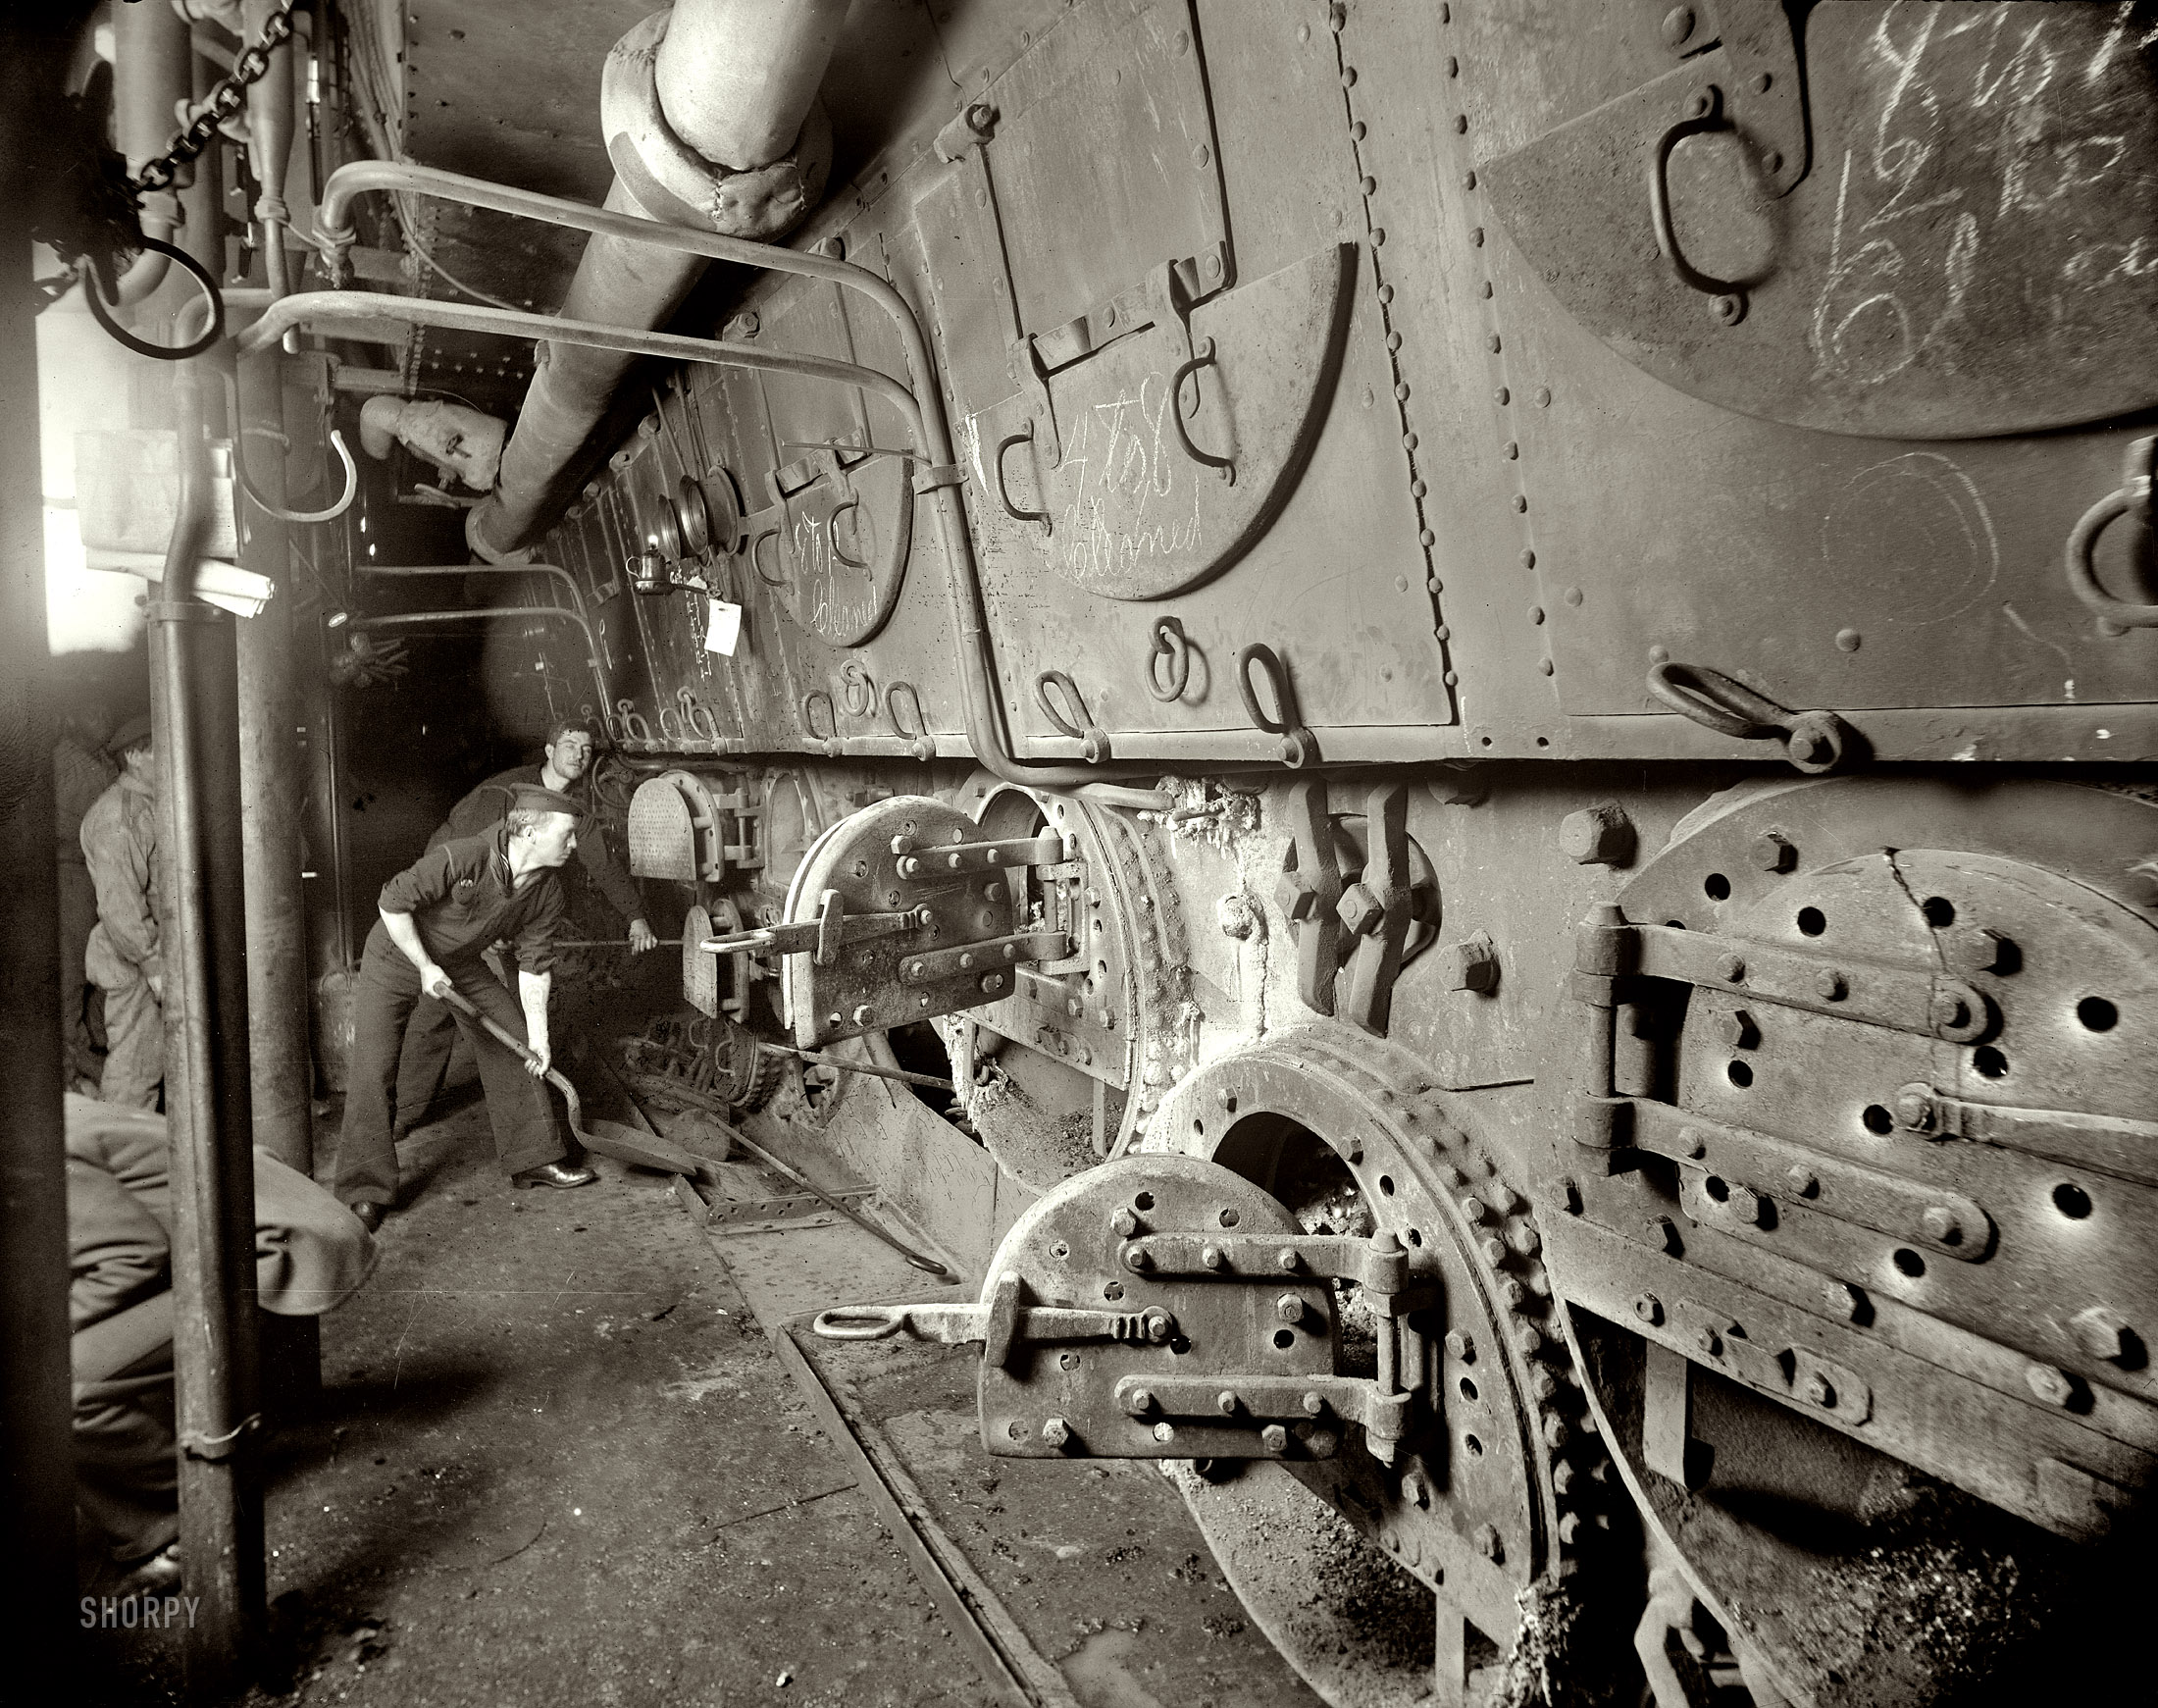 Circa 1897. "U.S.S. Massachusetts, fire room." Tending the battleship's coal-fired boilers. Photo by Edward H. Hart, Detroit Publishing Co. View full size.